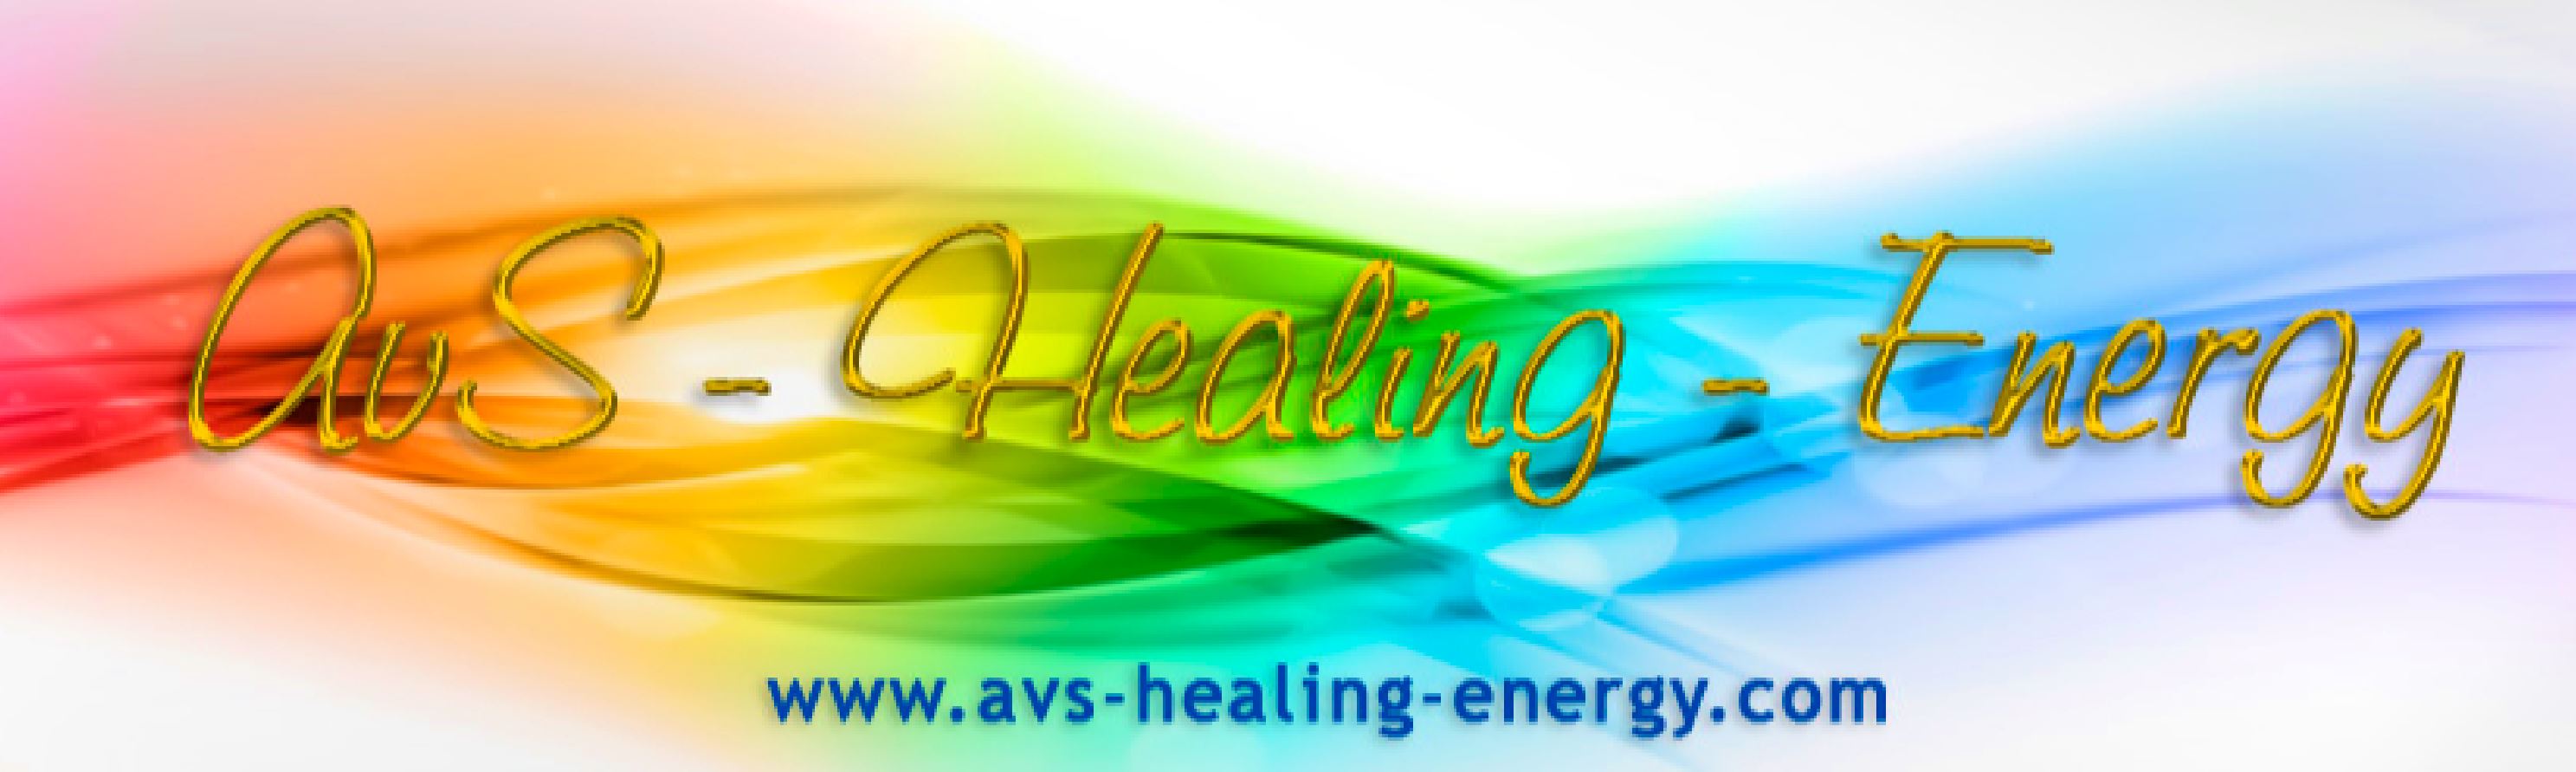 AVS-Healing